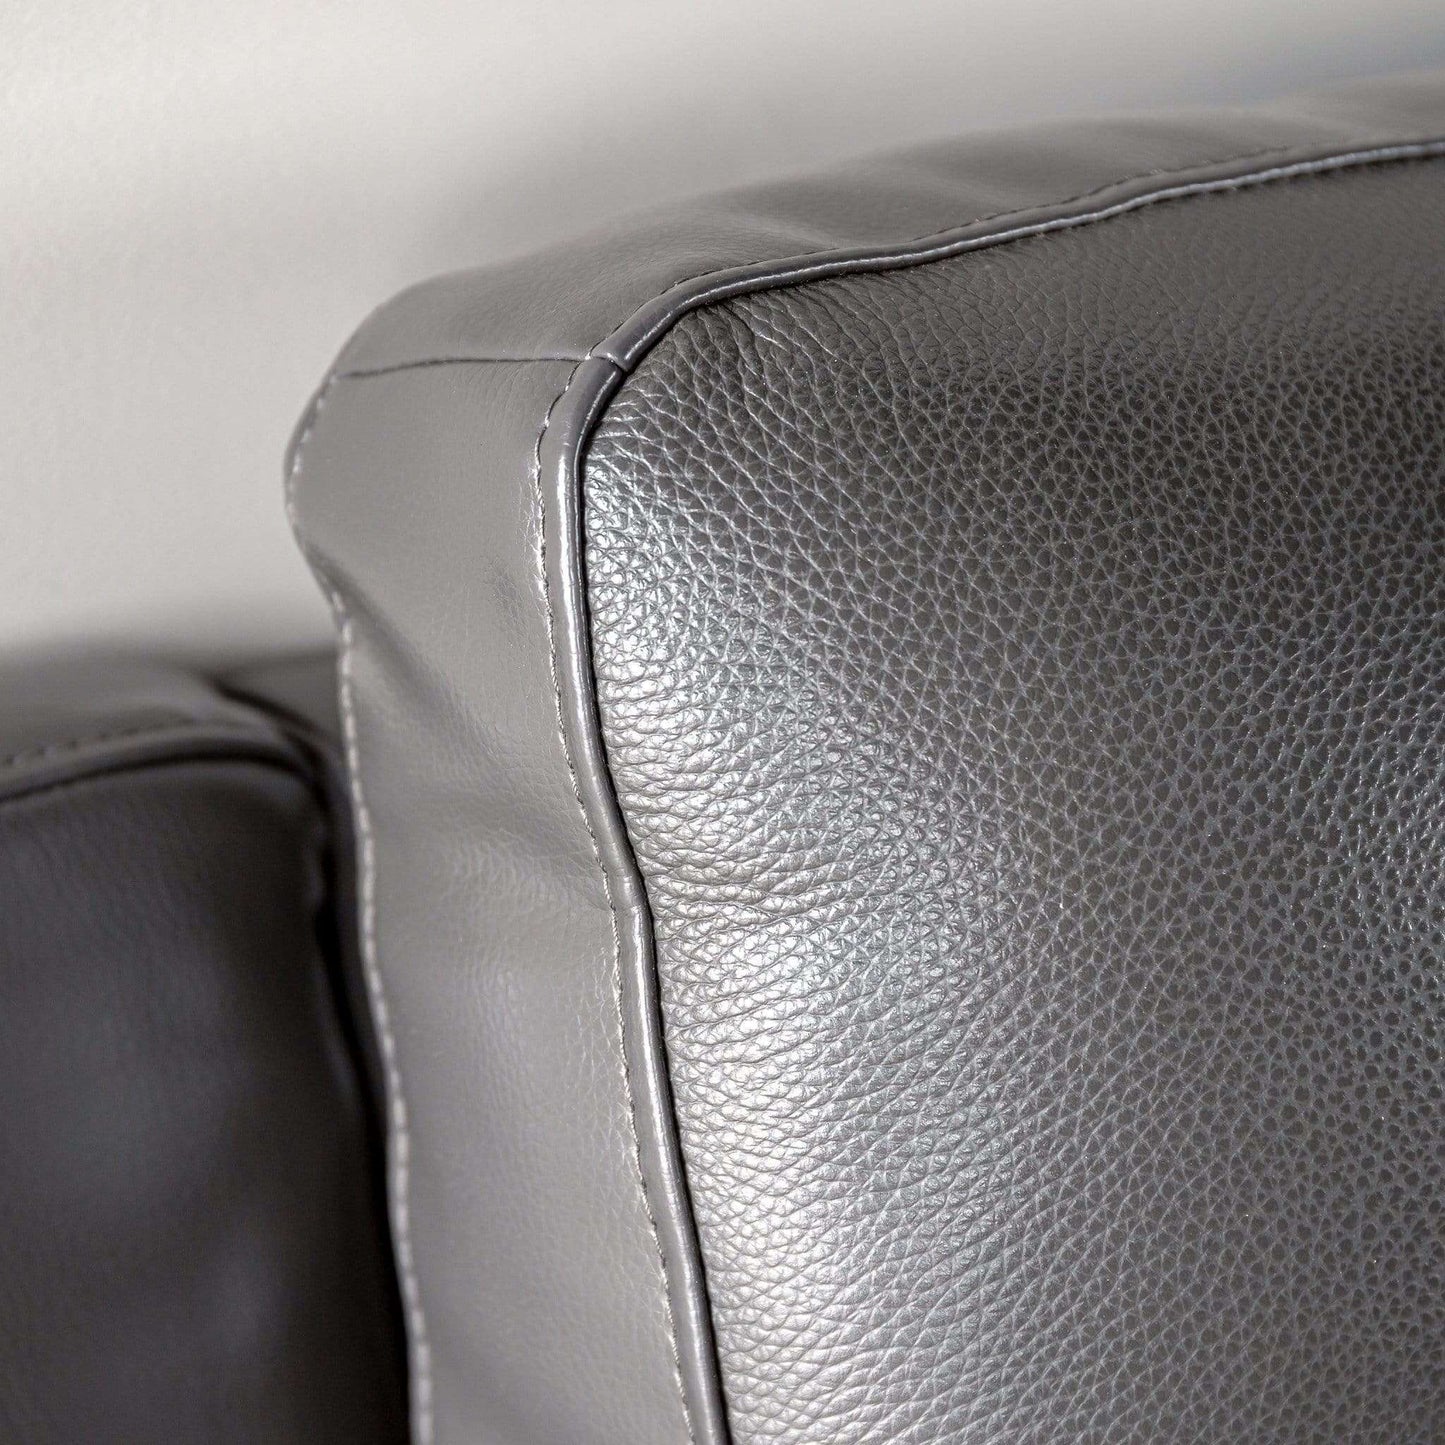 Furniture  -  Comfort King Detroit 2 Seater Sofa  -  50153208